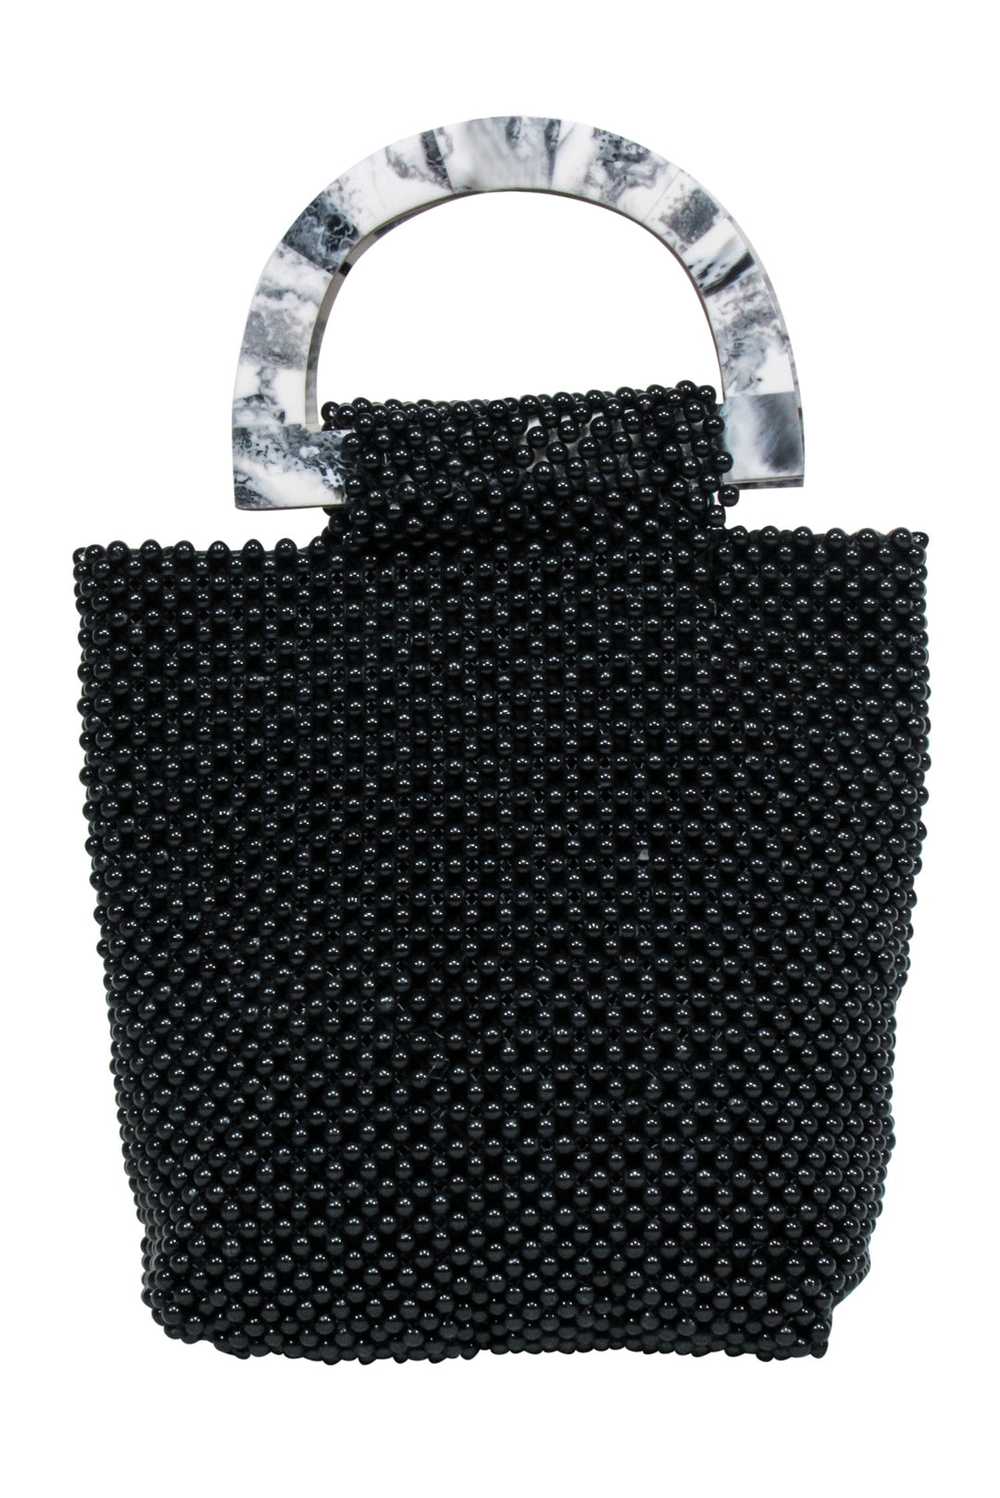 Cleobella - Black Beaded Handbag w/ Marble Handles - image 3